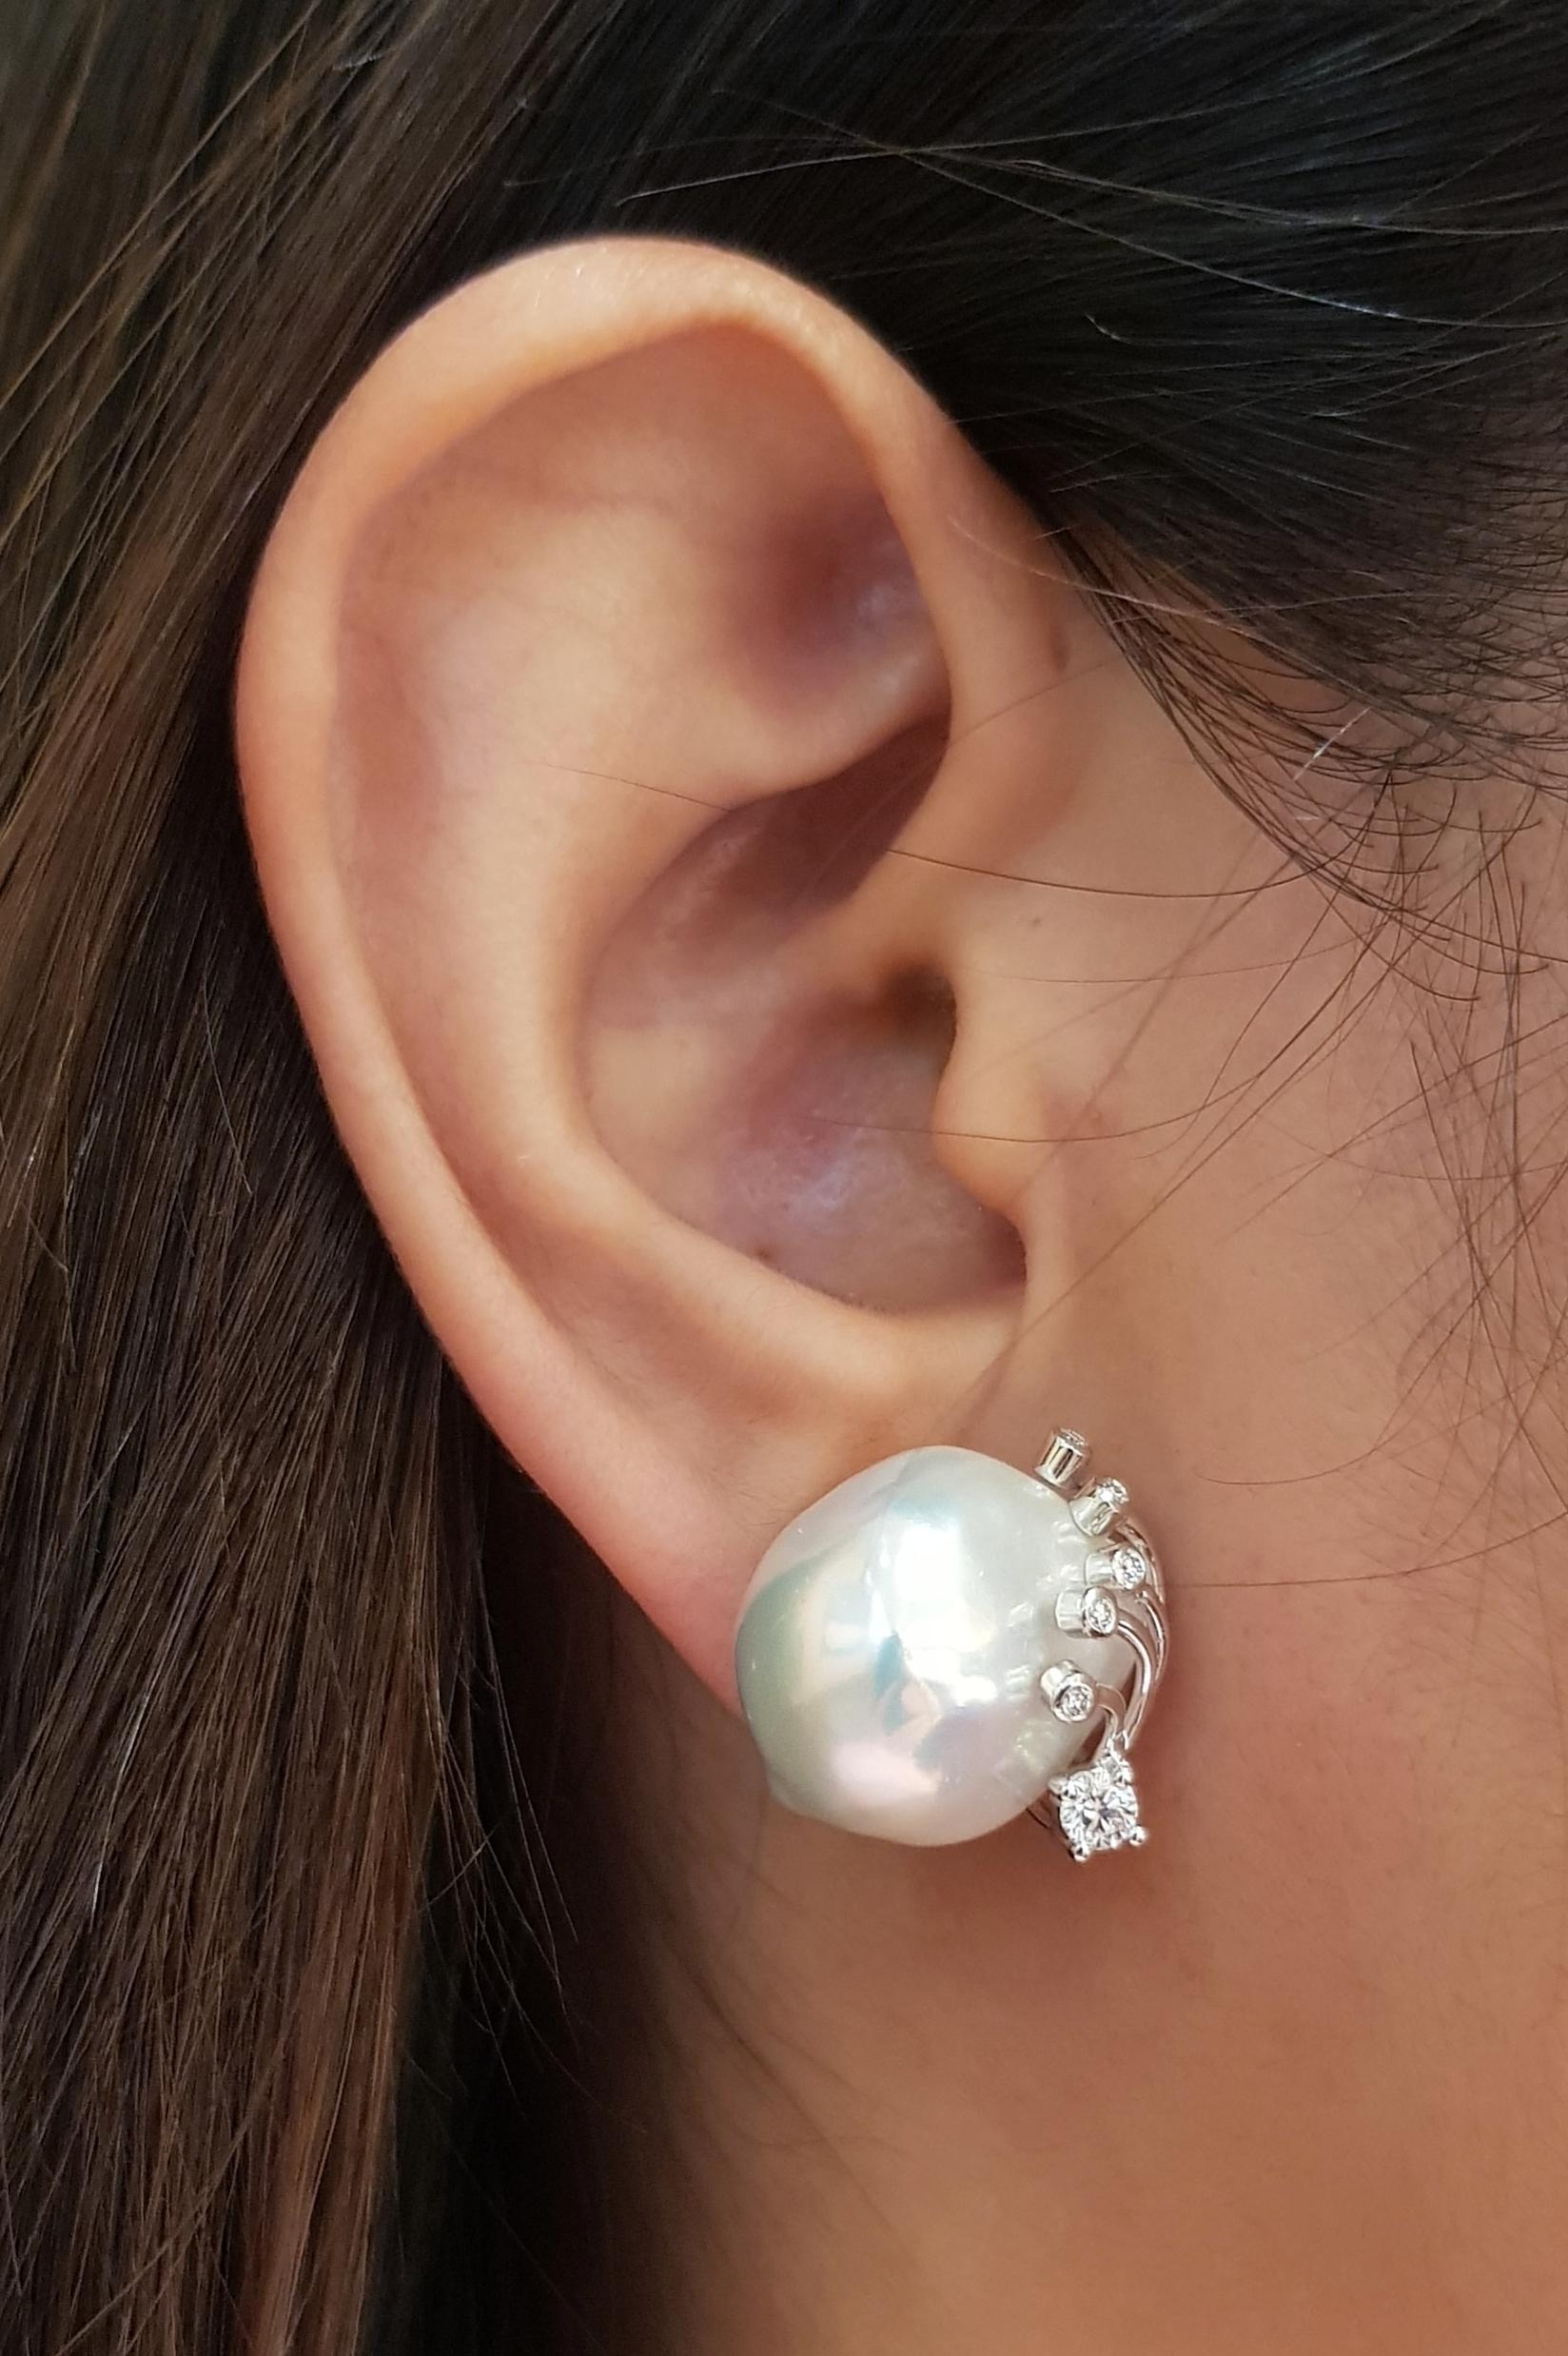 Fresh Water Pearl with Diamond 0.32 carat Earrings set in 18 Karat White Gold Settings

Width:   1.7 cm 
Length:  1.7 cm
Total Weight: 16.62 grams

